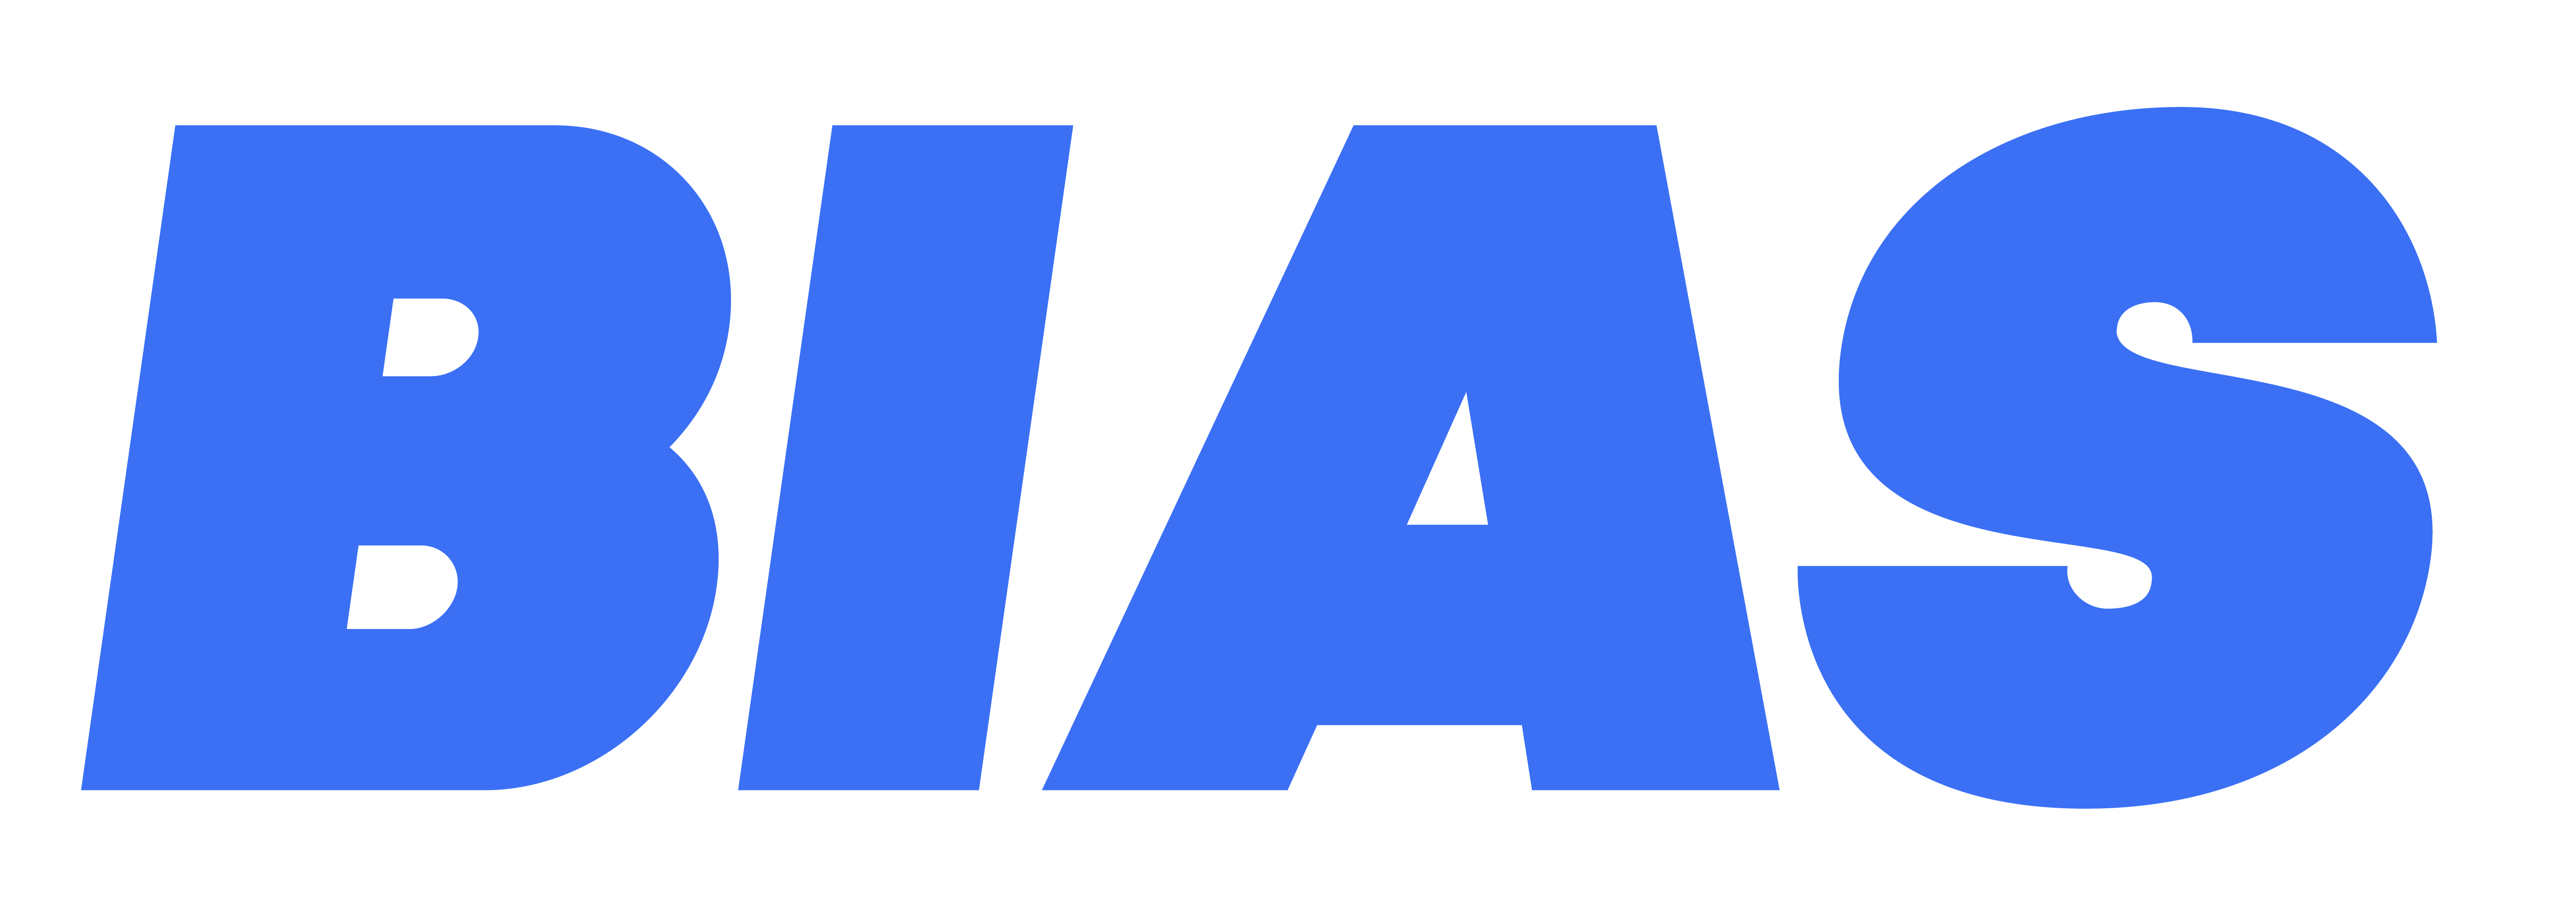 Digital BIAS logo